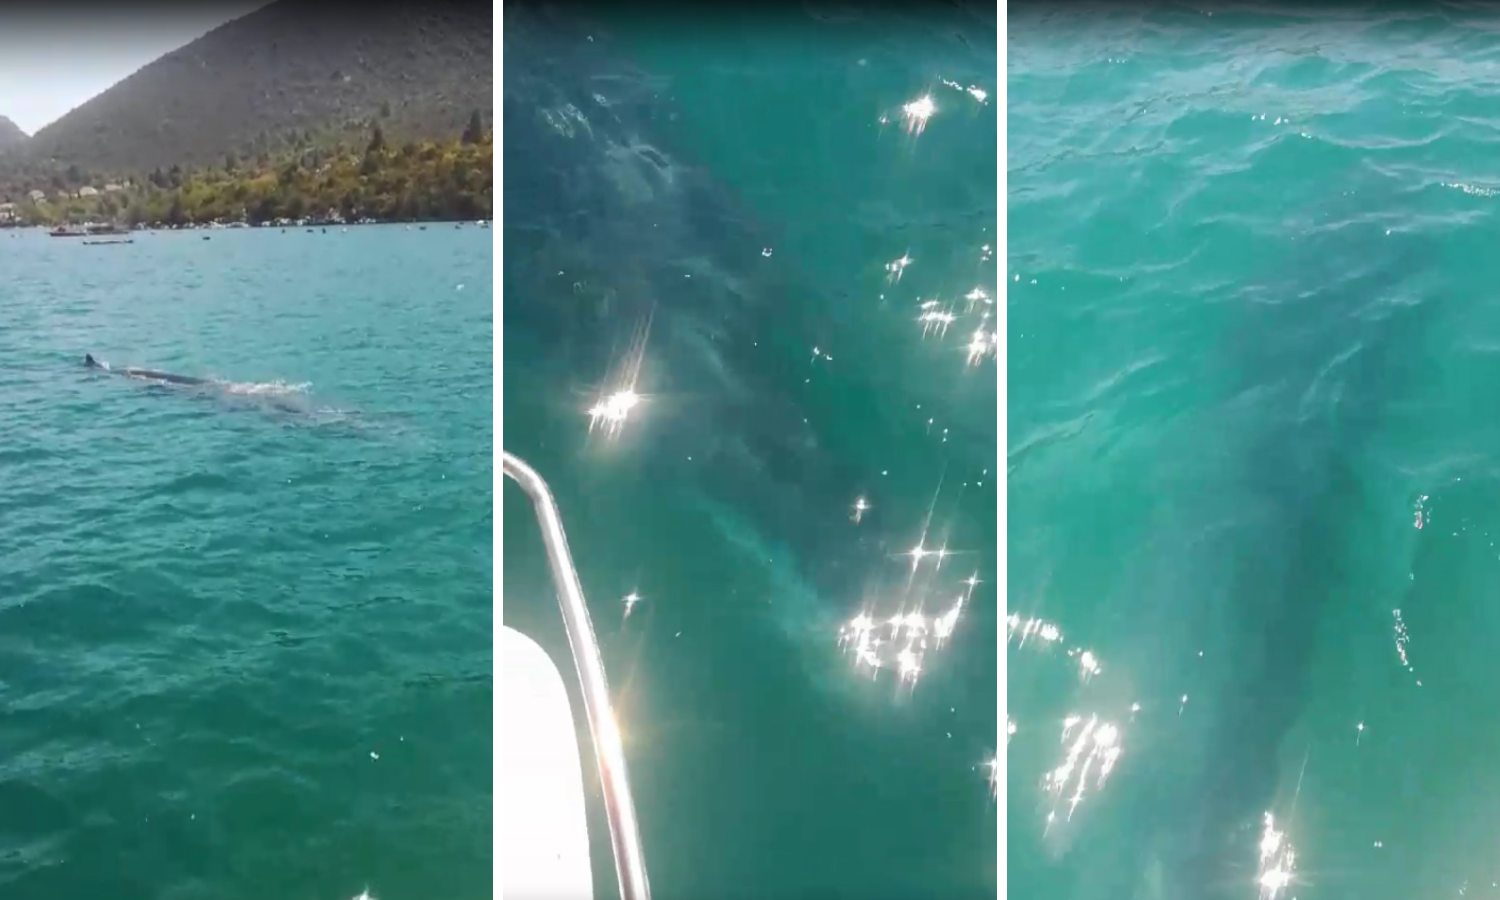 Plovili zaljevom i ugledali kita: Normalno da te bude malo strah